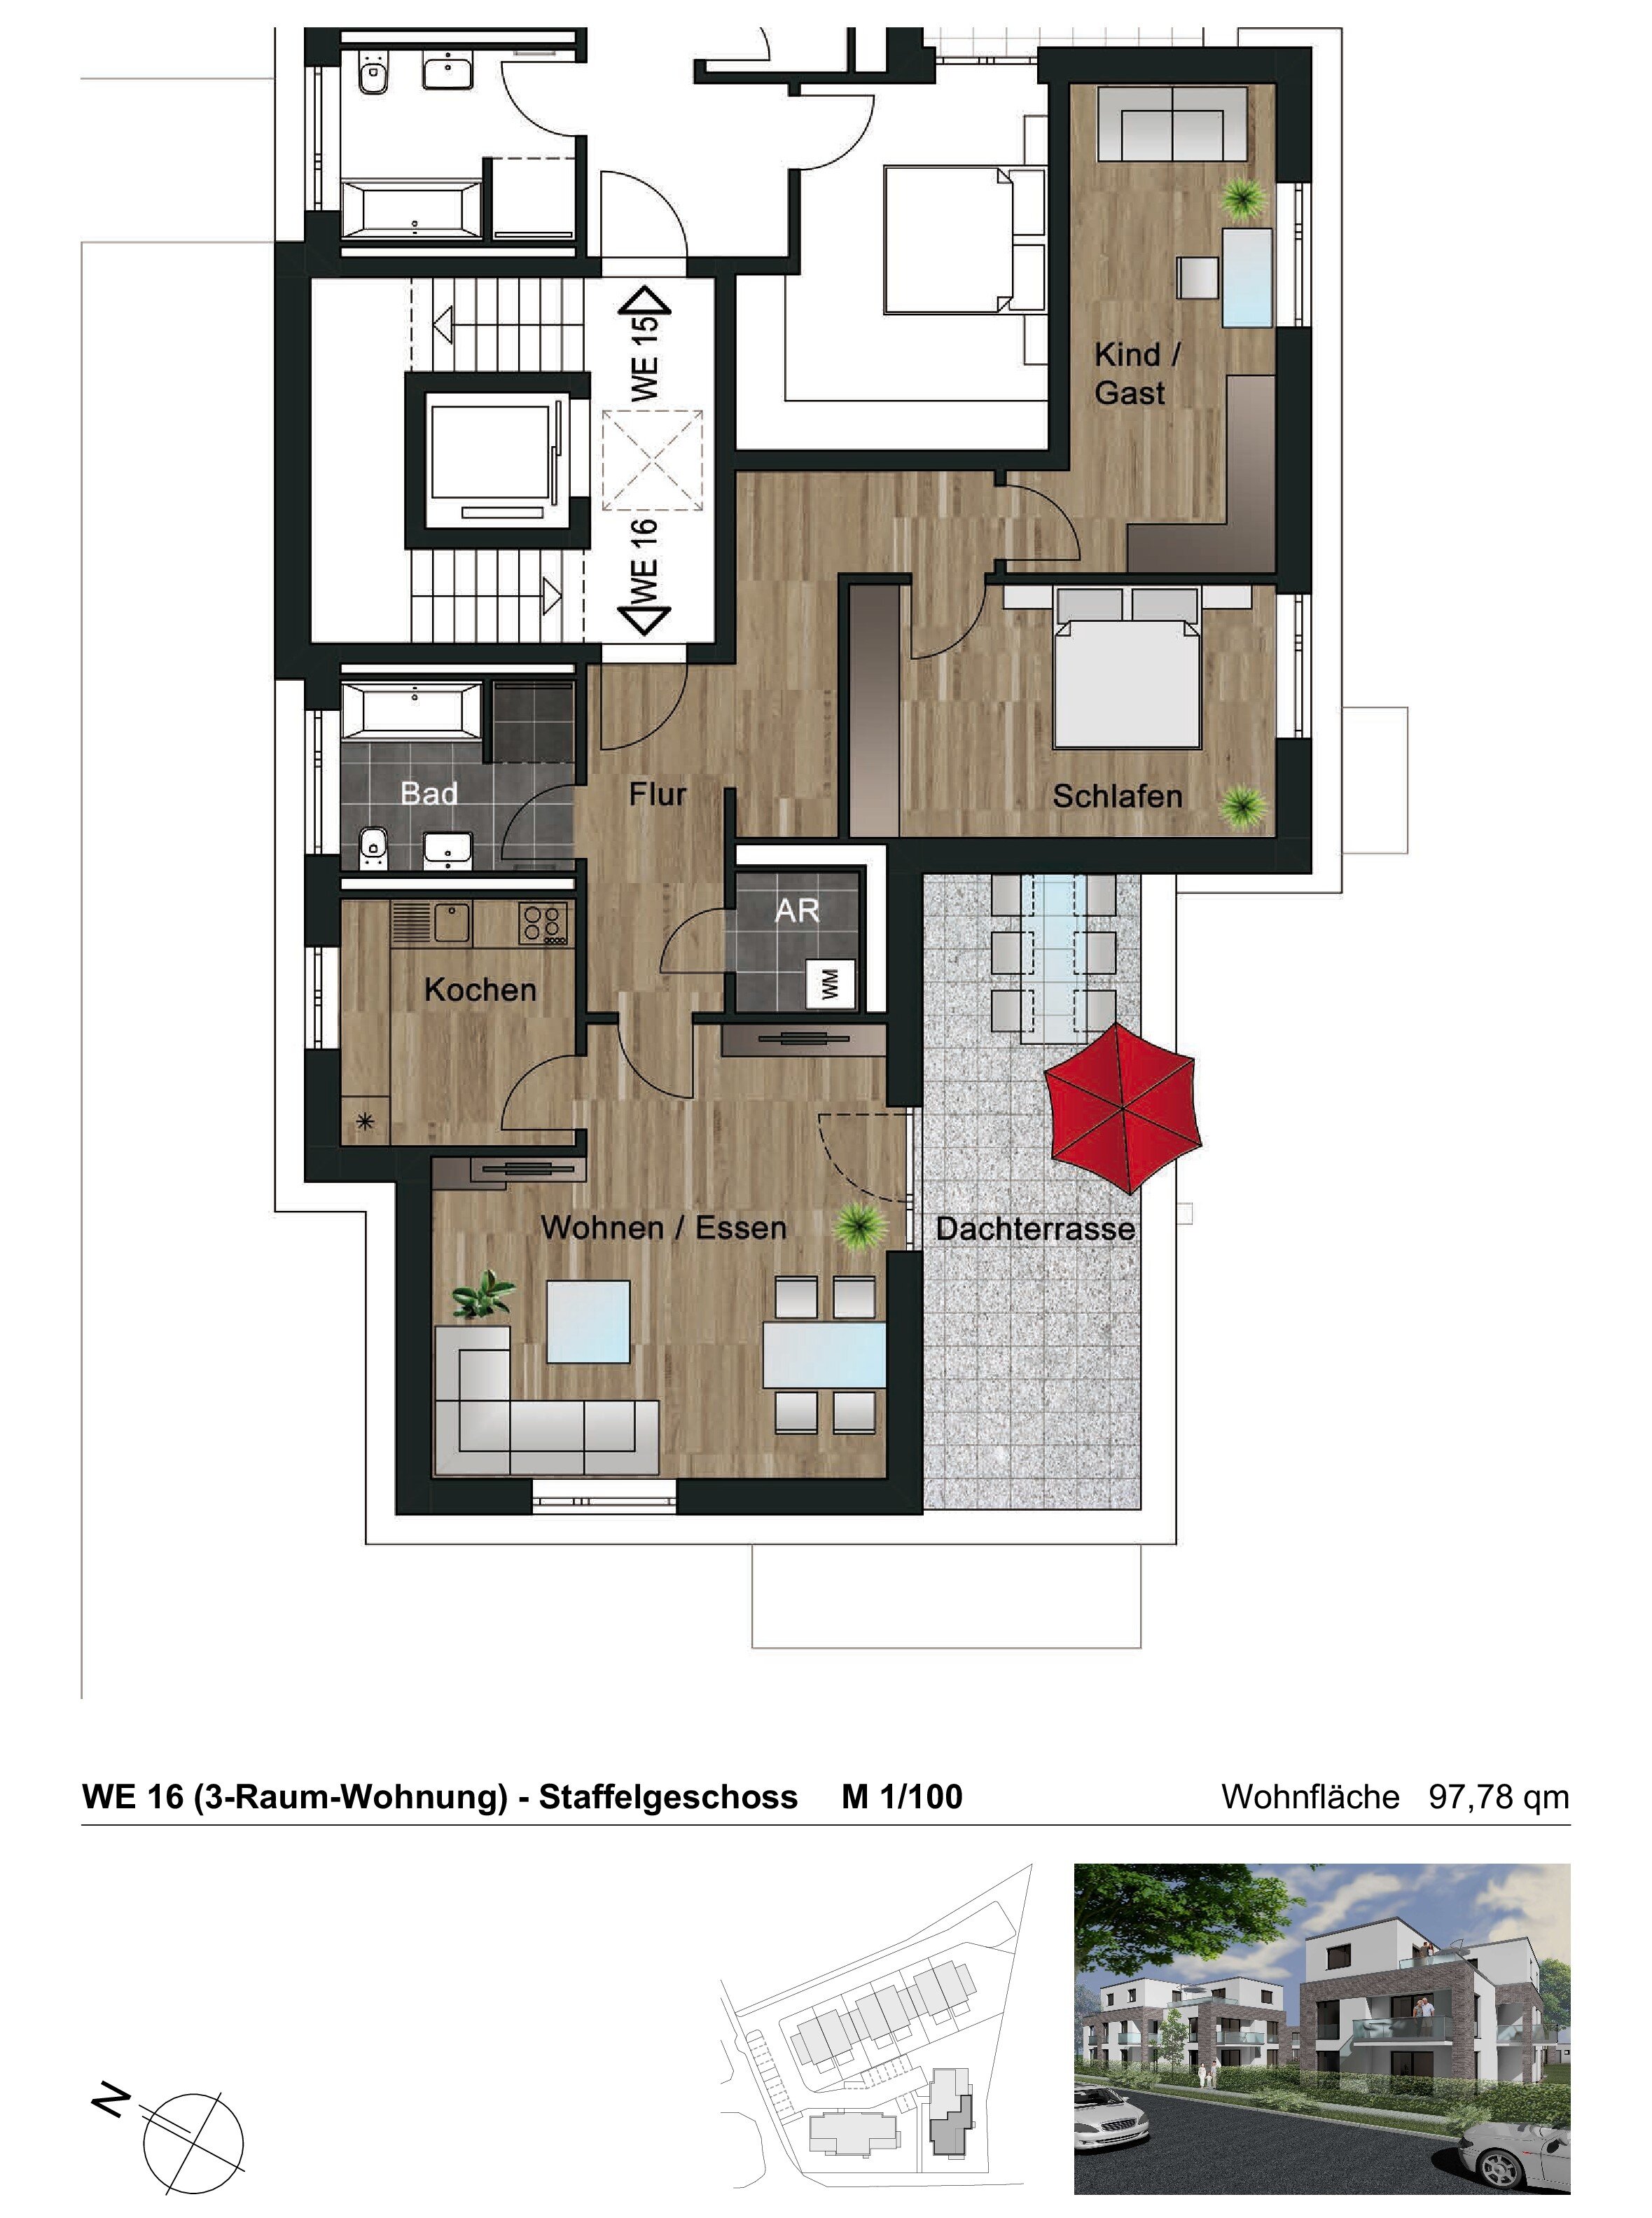 Wohnung zur Miete 1.100,03 € 3 Zimmer 97,8 m²<br/>Wohnfläche 2. Stock<br/>Geschoss Külzauer Weg 5h Möser Lostau 39291